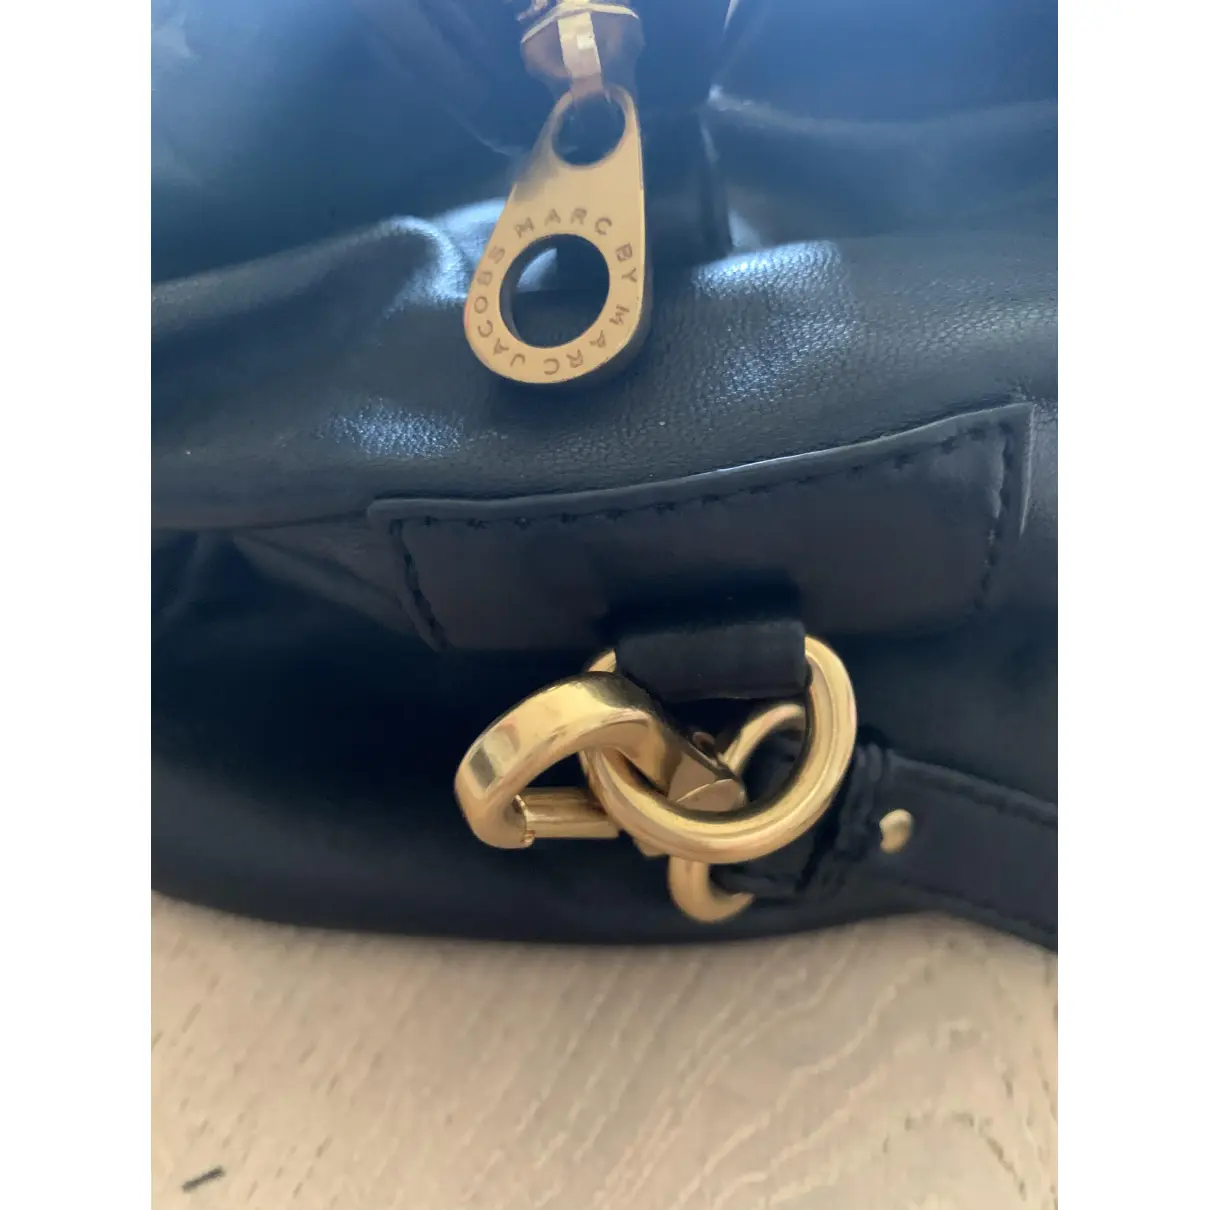 Classic Q leather handbag Marc by Marc Jacobs